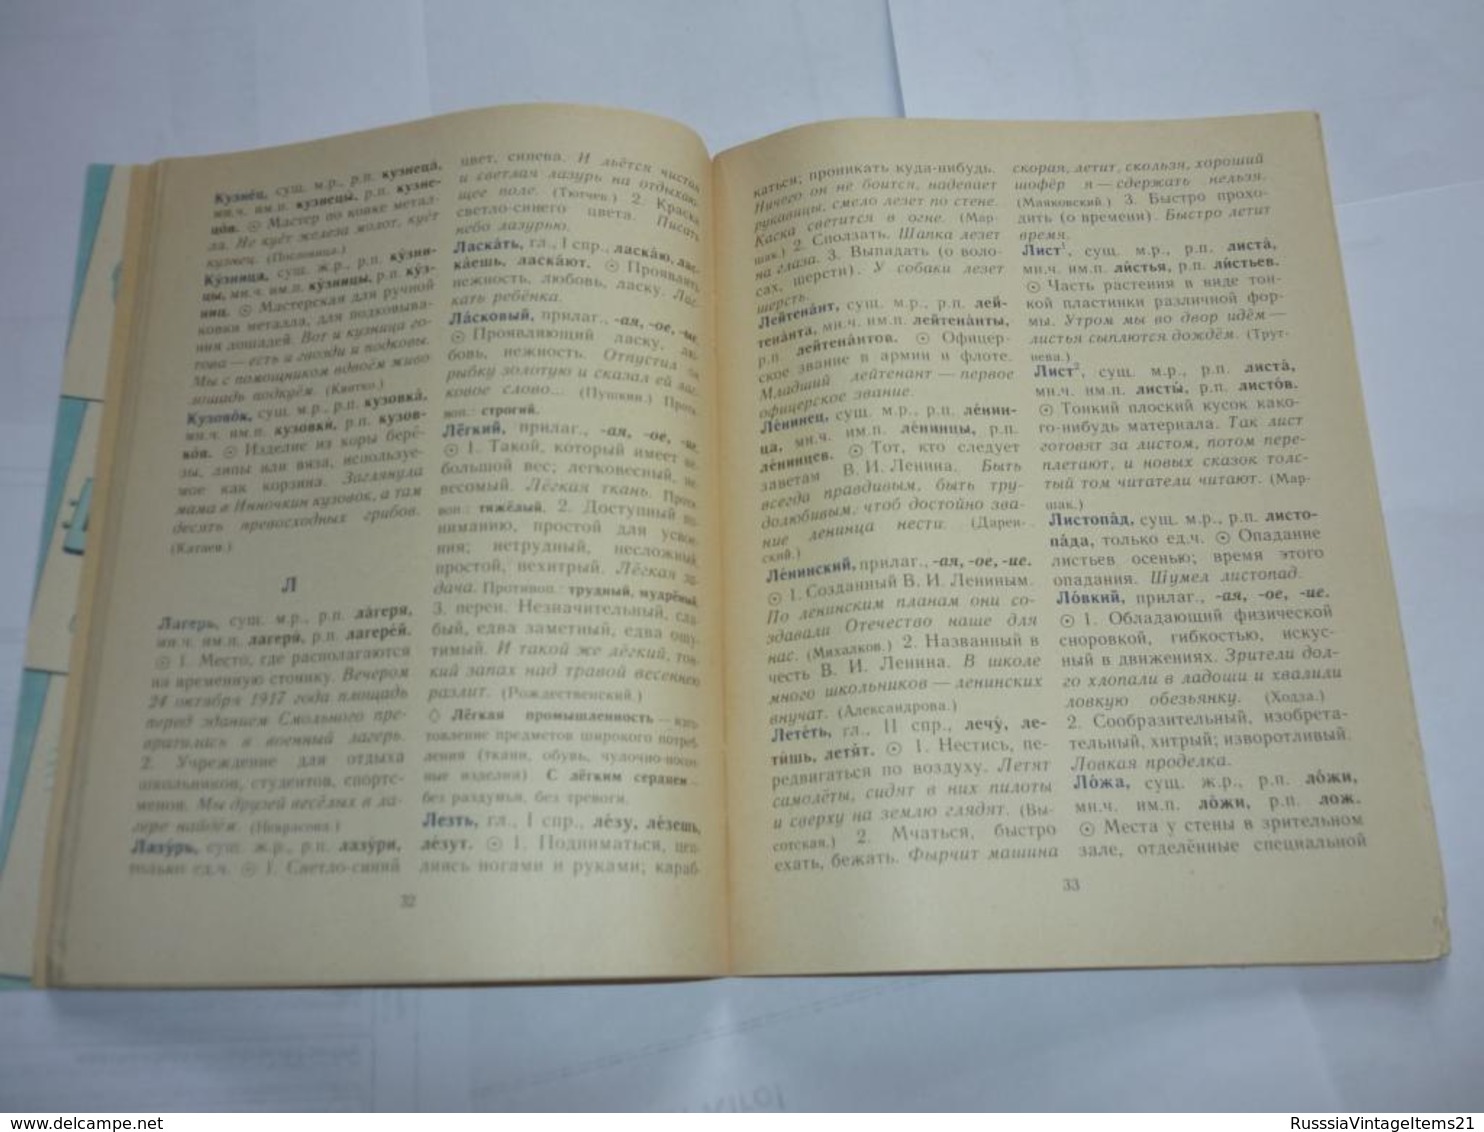 Neusypova N. - Explanatory dictionary of the Russian language